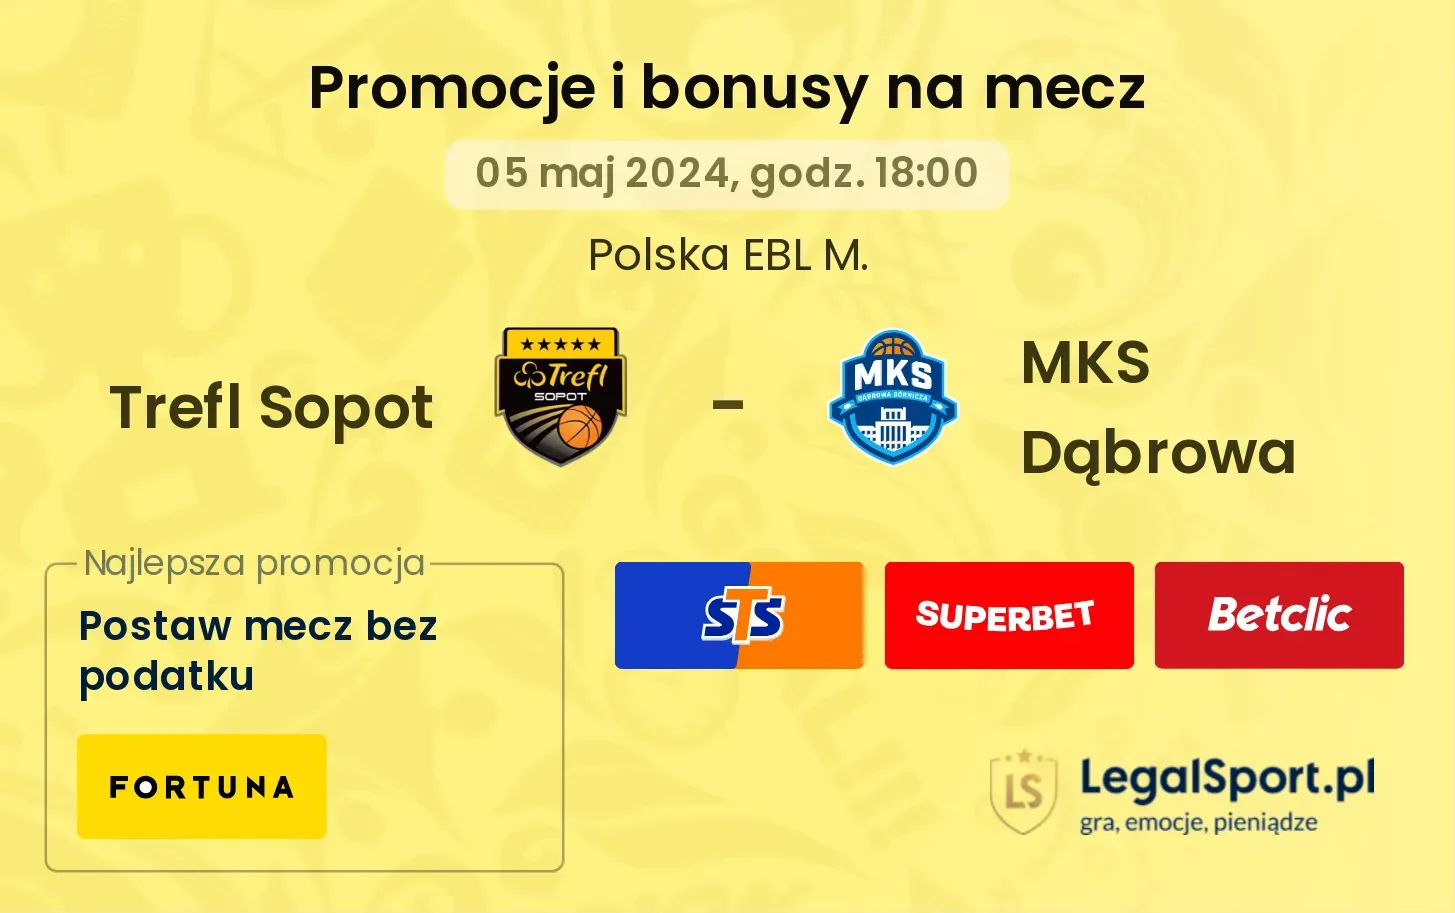 Trefl Sopot - MKS Dąbrowa promocje bonusy na mecz